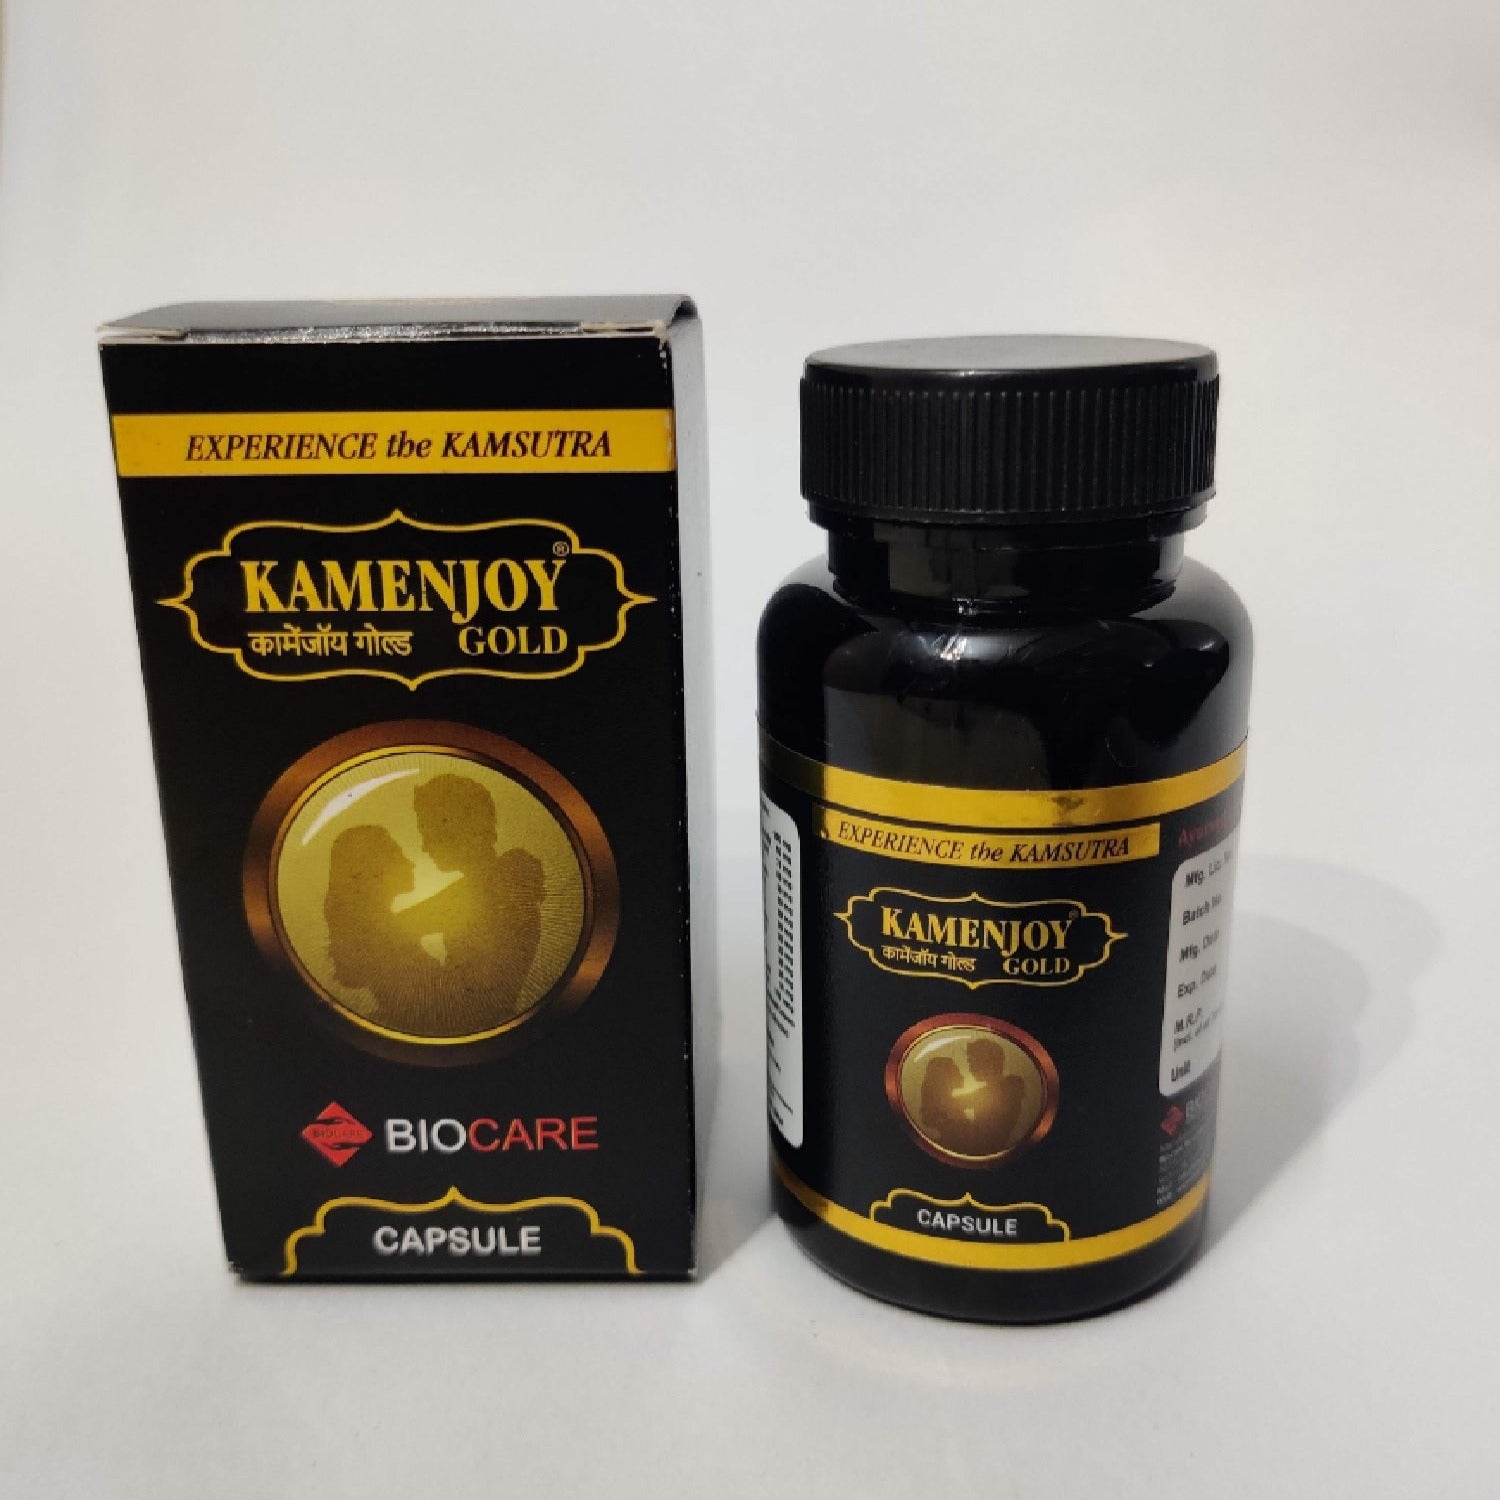 Biocare Ayurvedic Kamenjoy Gold Experience The Kamsutra 20 Capsule